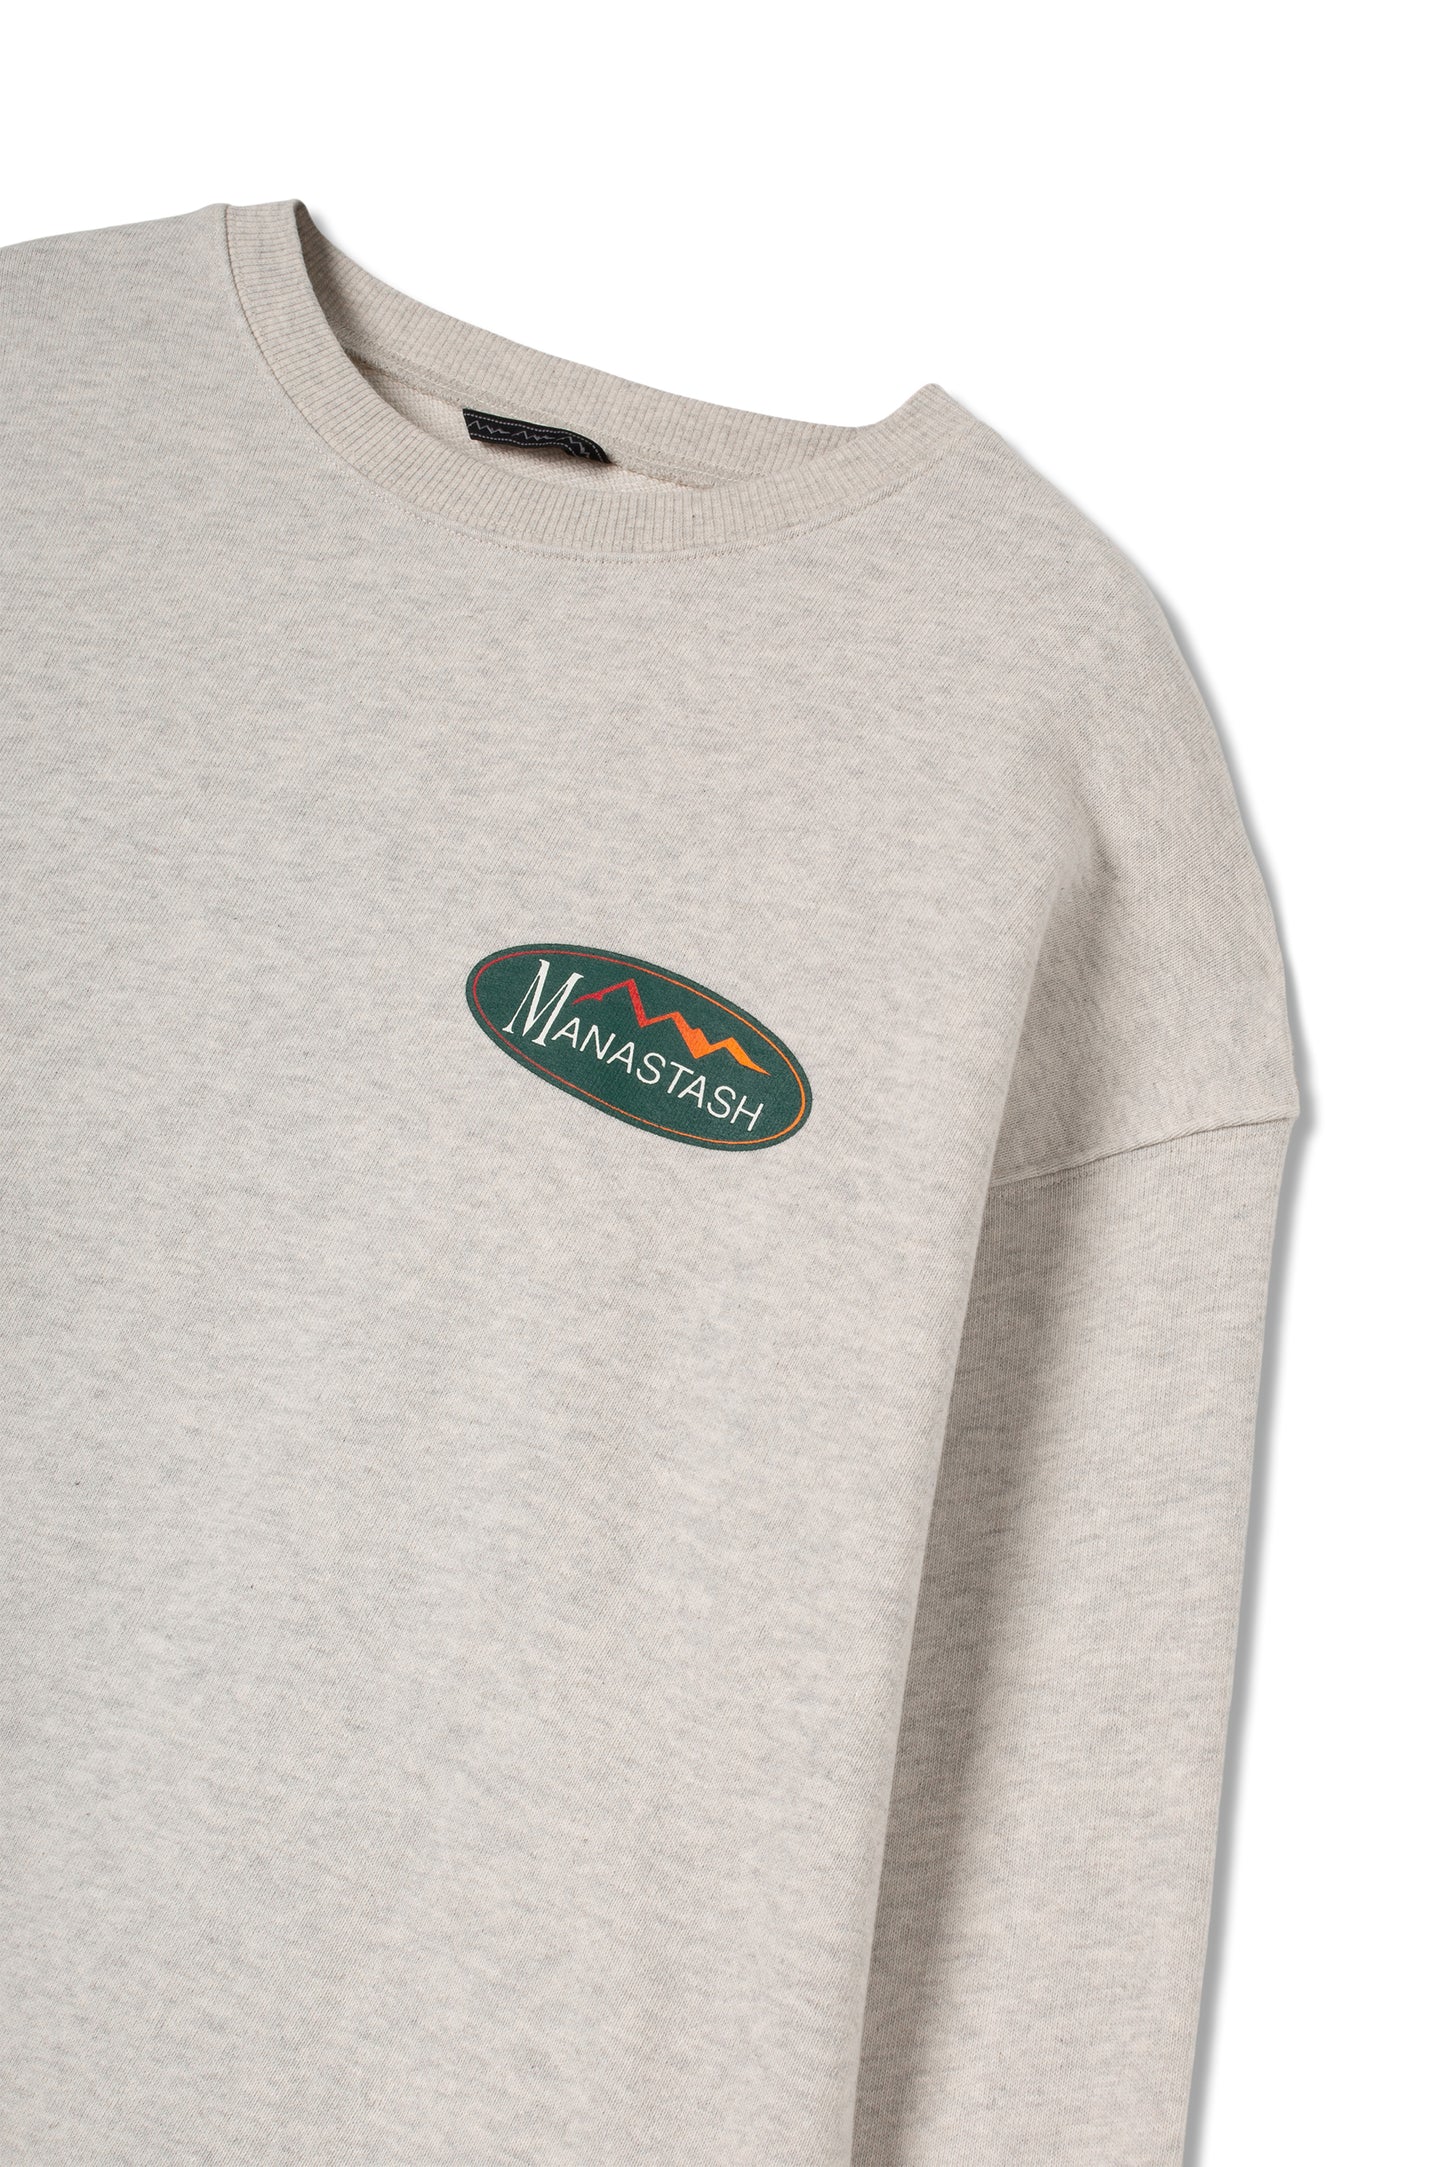 Cascade Sweatshirts Original Logo (Oatmeal)